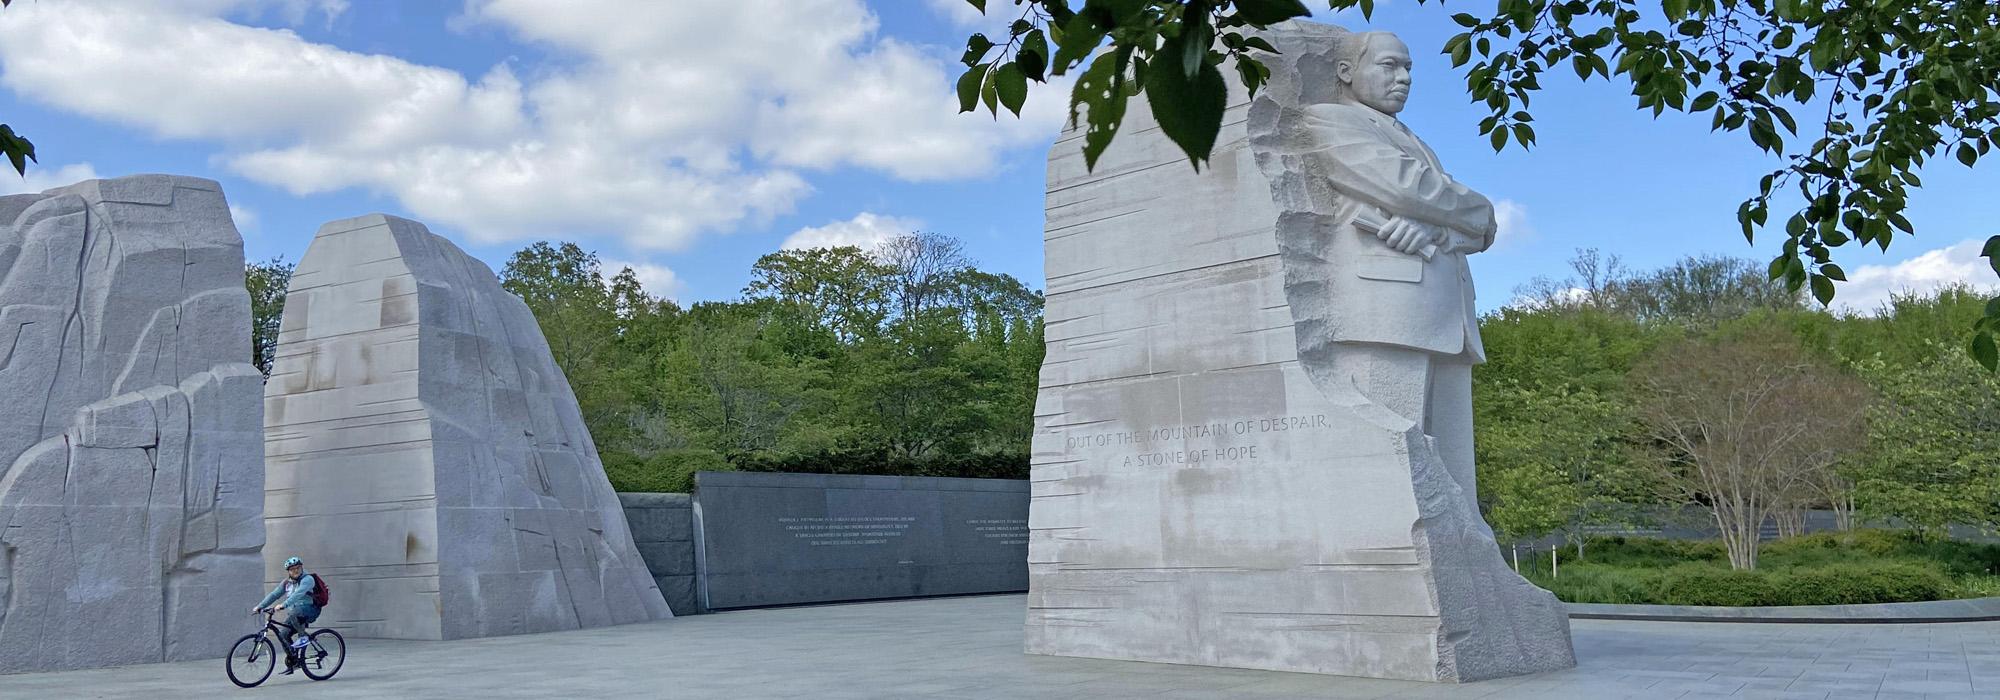 Martin Luther King, Jr. Memorial, Washington, DC